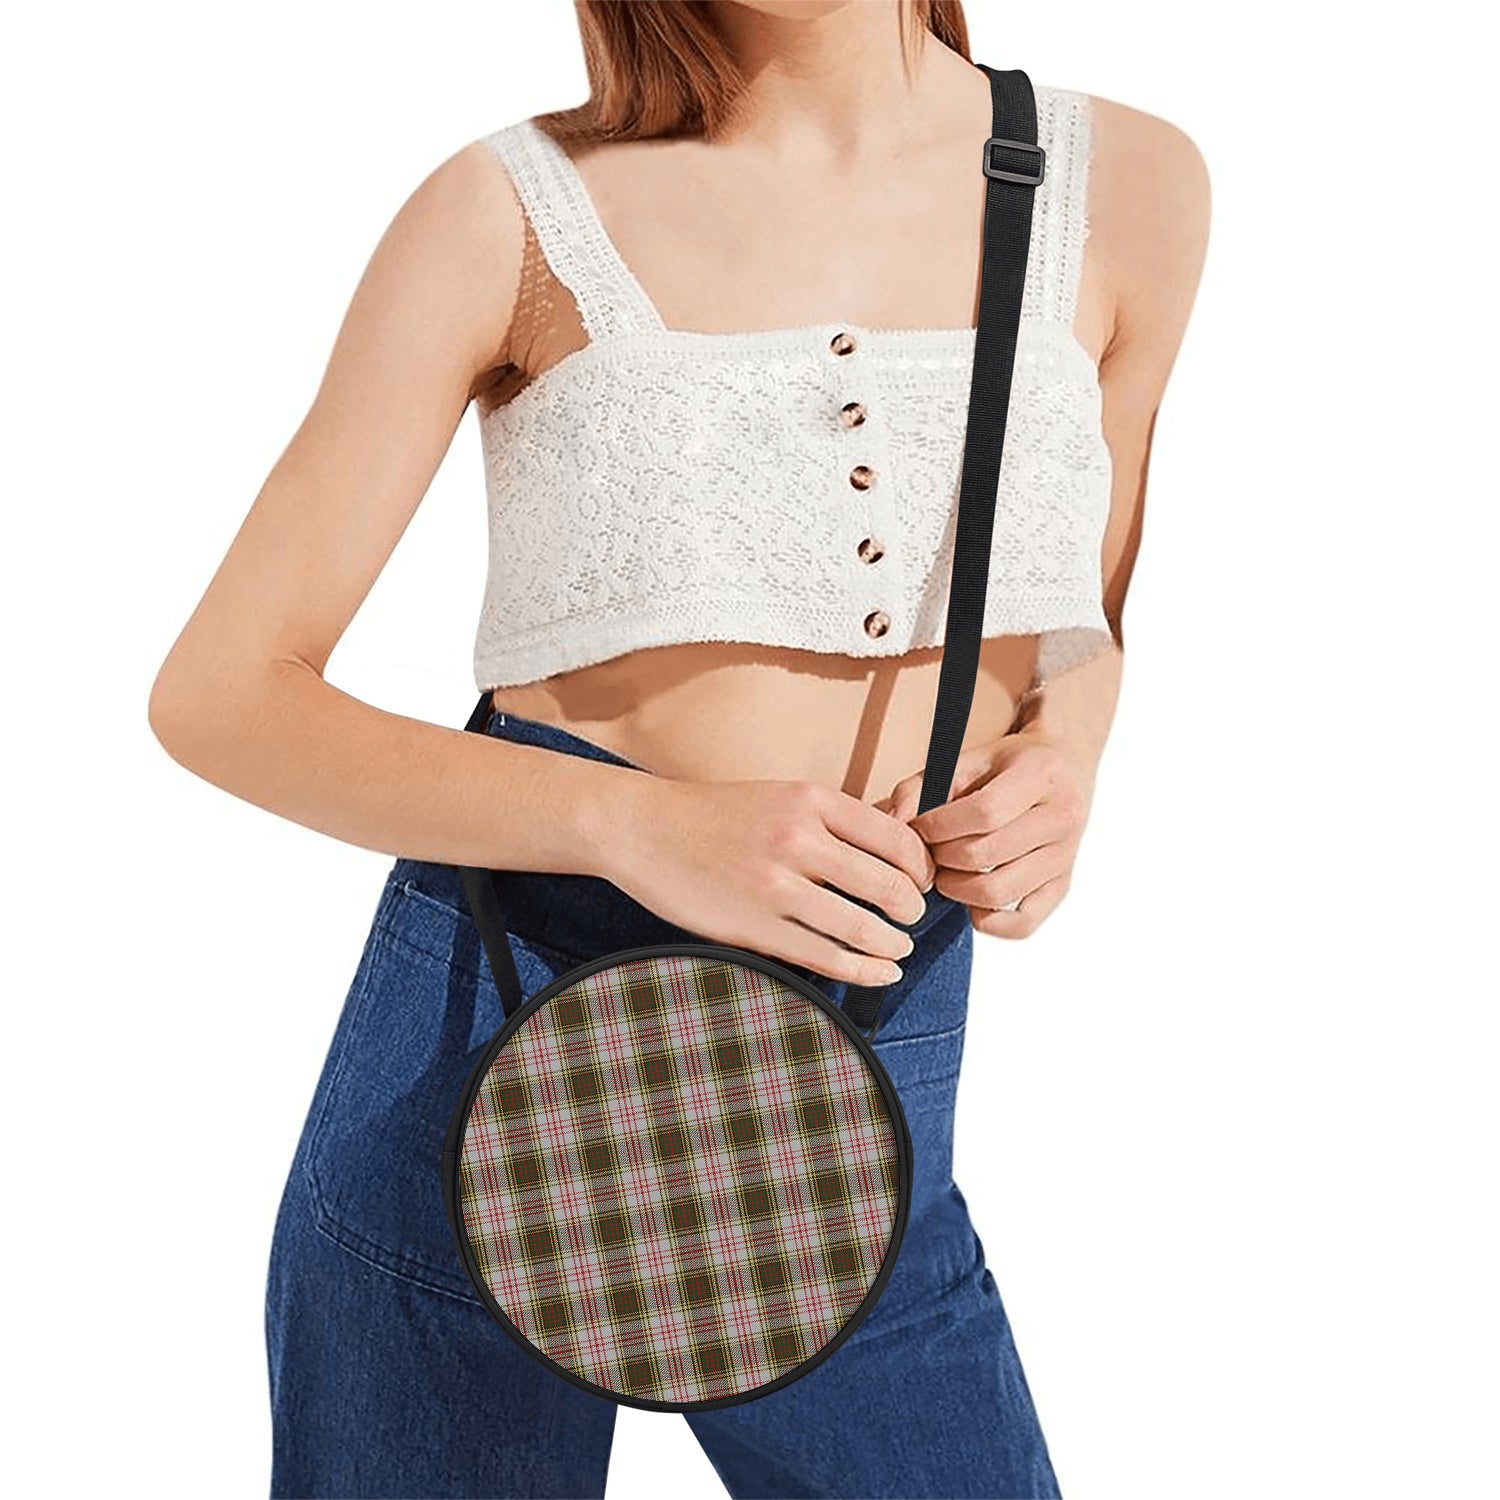 Anderson Dress Tartan Round Satchel Bags One Size 9*9*2.7 inch - Tartanvibesclothing